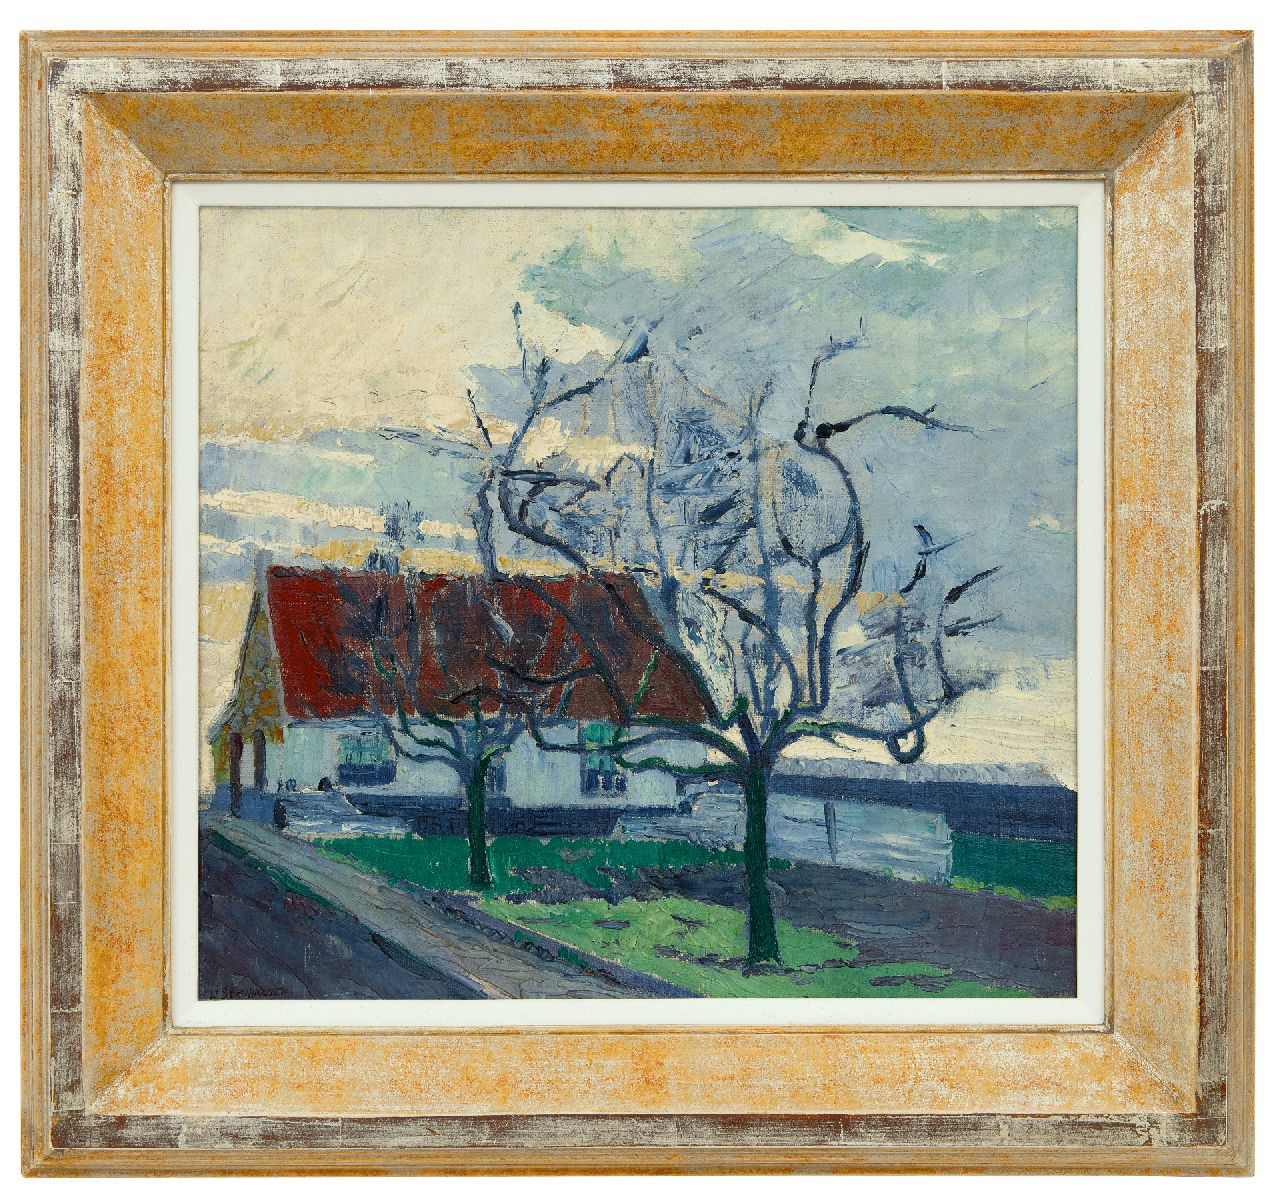 Schuhmacher W.G.C.  | Wijtze Gerrit Carel 'Wim' Schuhmacher | Paintings offered for sale | A farmstead, oil on canvas 39.3 x 43.0 cm, signed l.l. and painted circa 1914